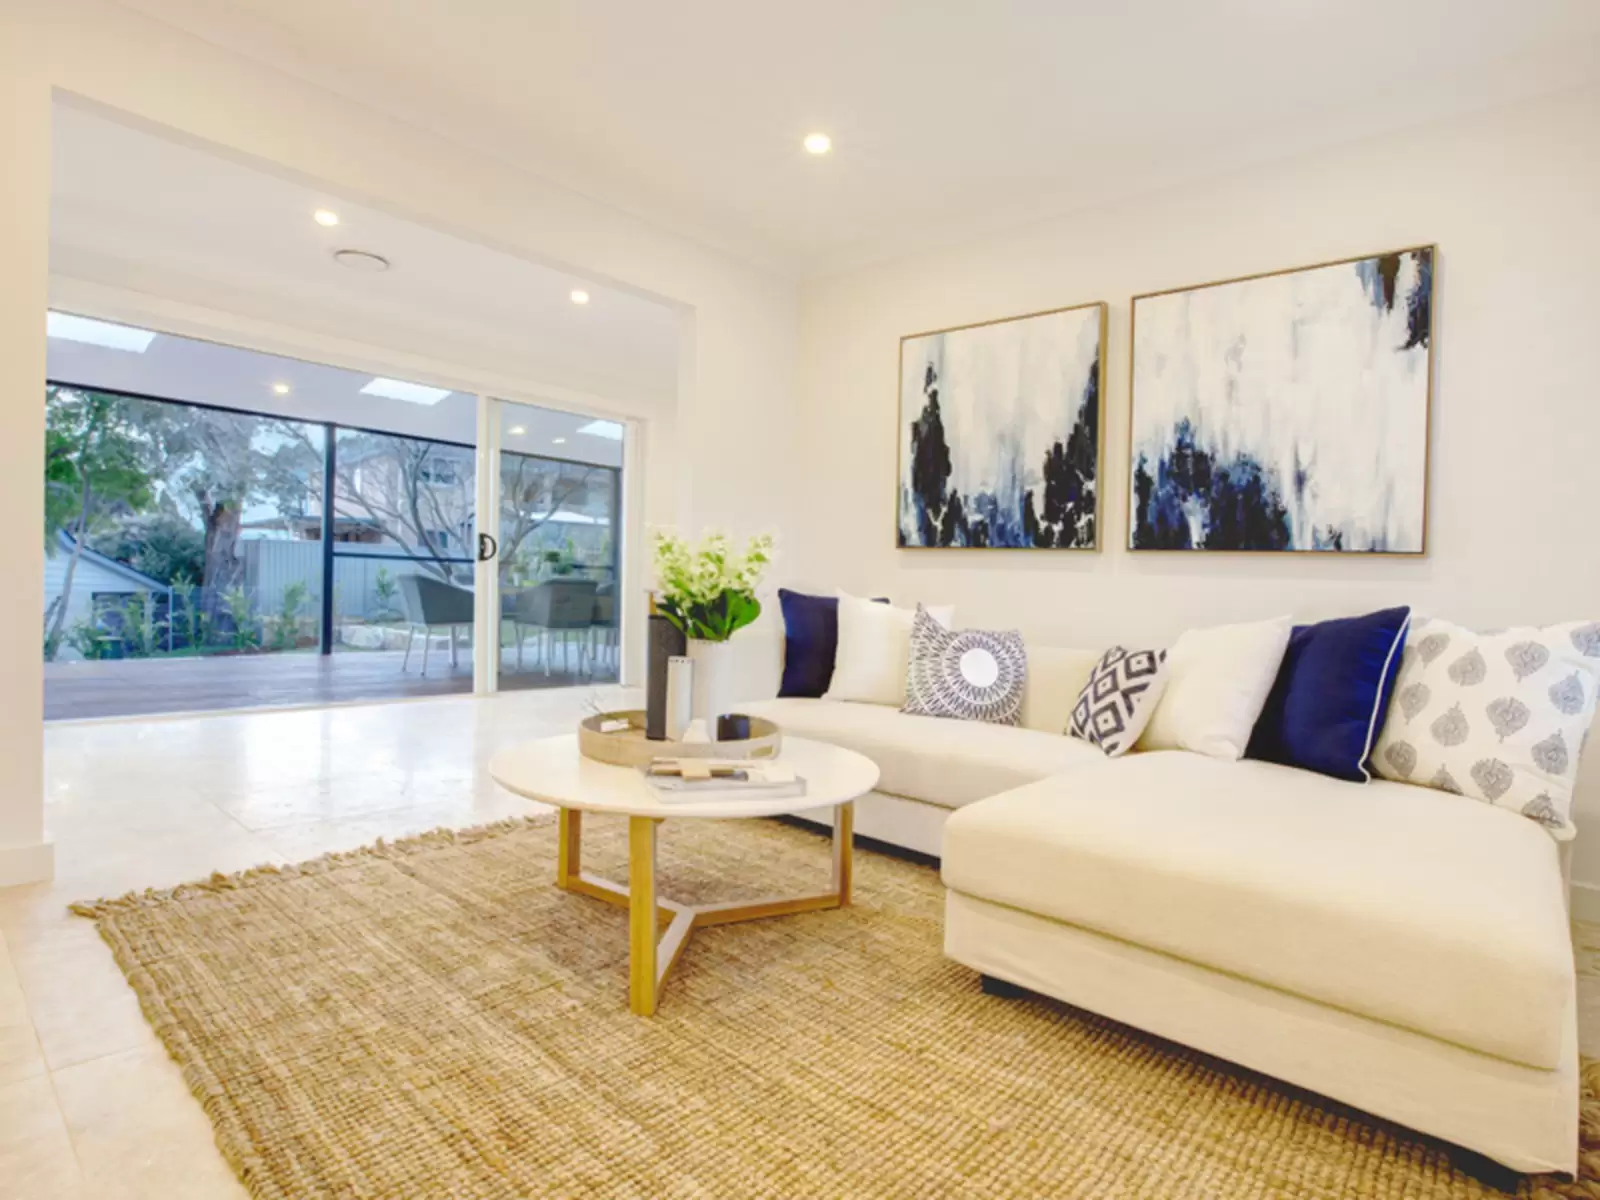 67 Cropley Drive, Baulkham Hills Sold by Sydney Sotheby's International Realty - image 4